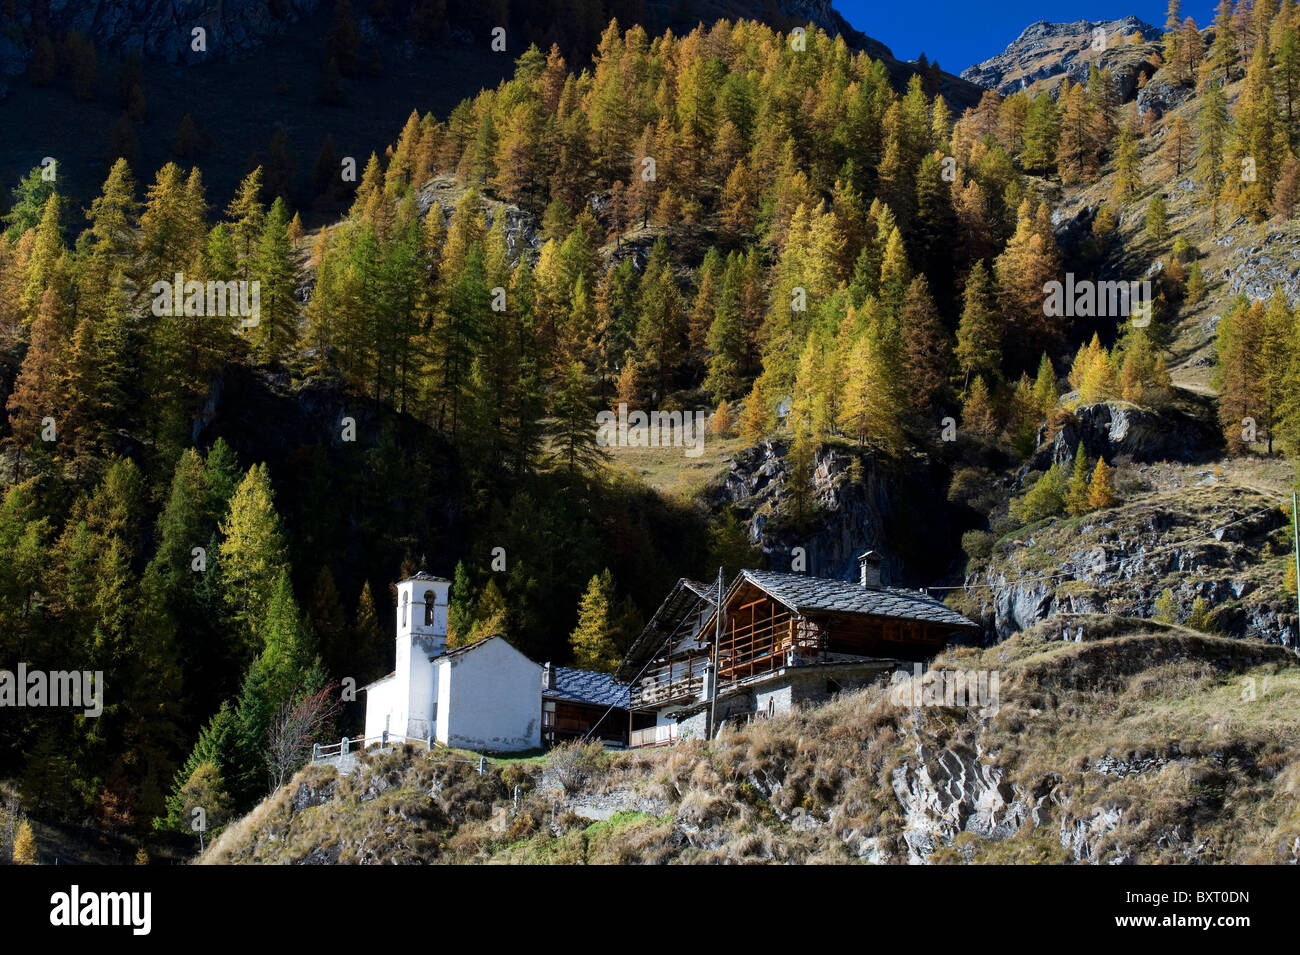 Biel Walser village, Gressoney-La-Trinite, Gressoney Valley, Aosta Valley, Italy, Europe Stock Photo